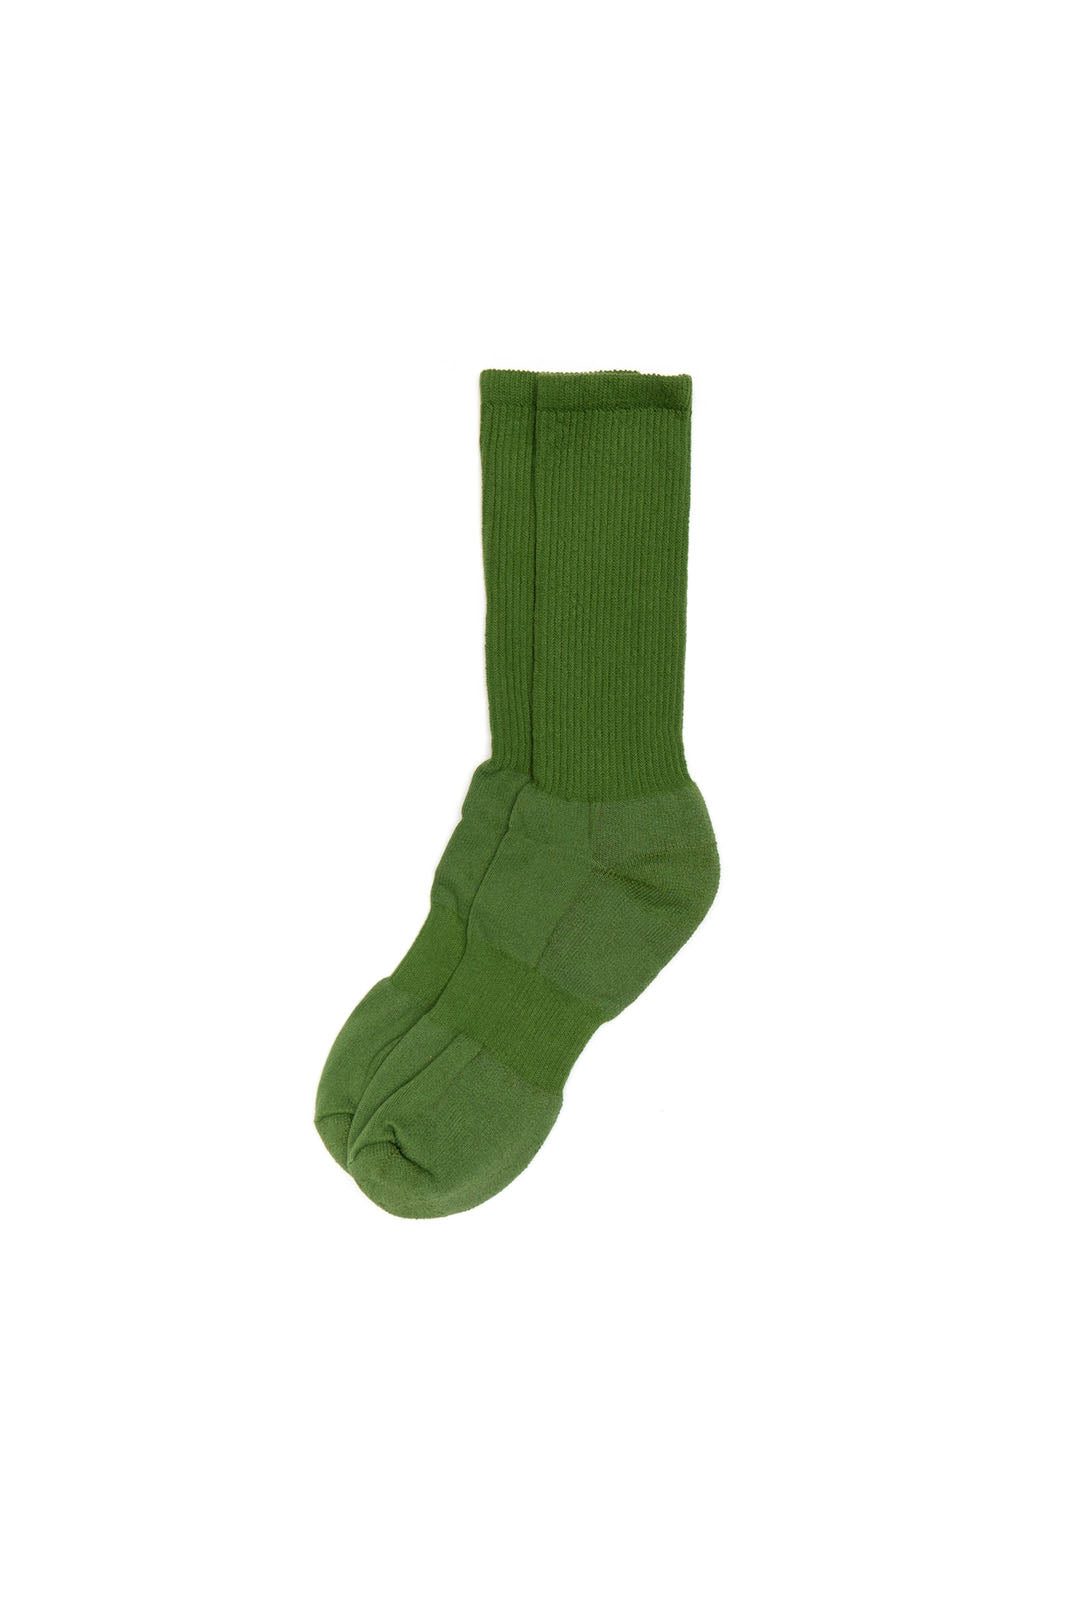 Mil-Speck Sport Sock - Olive